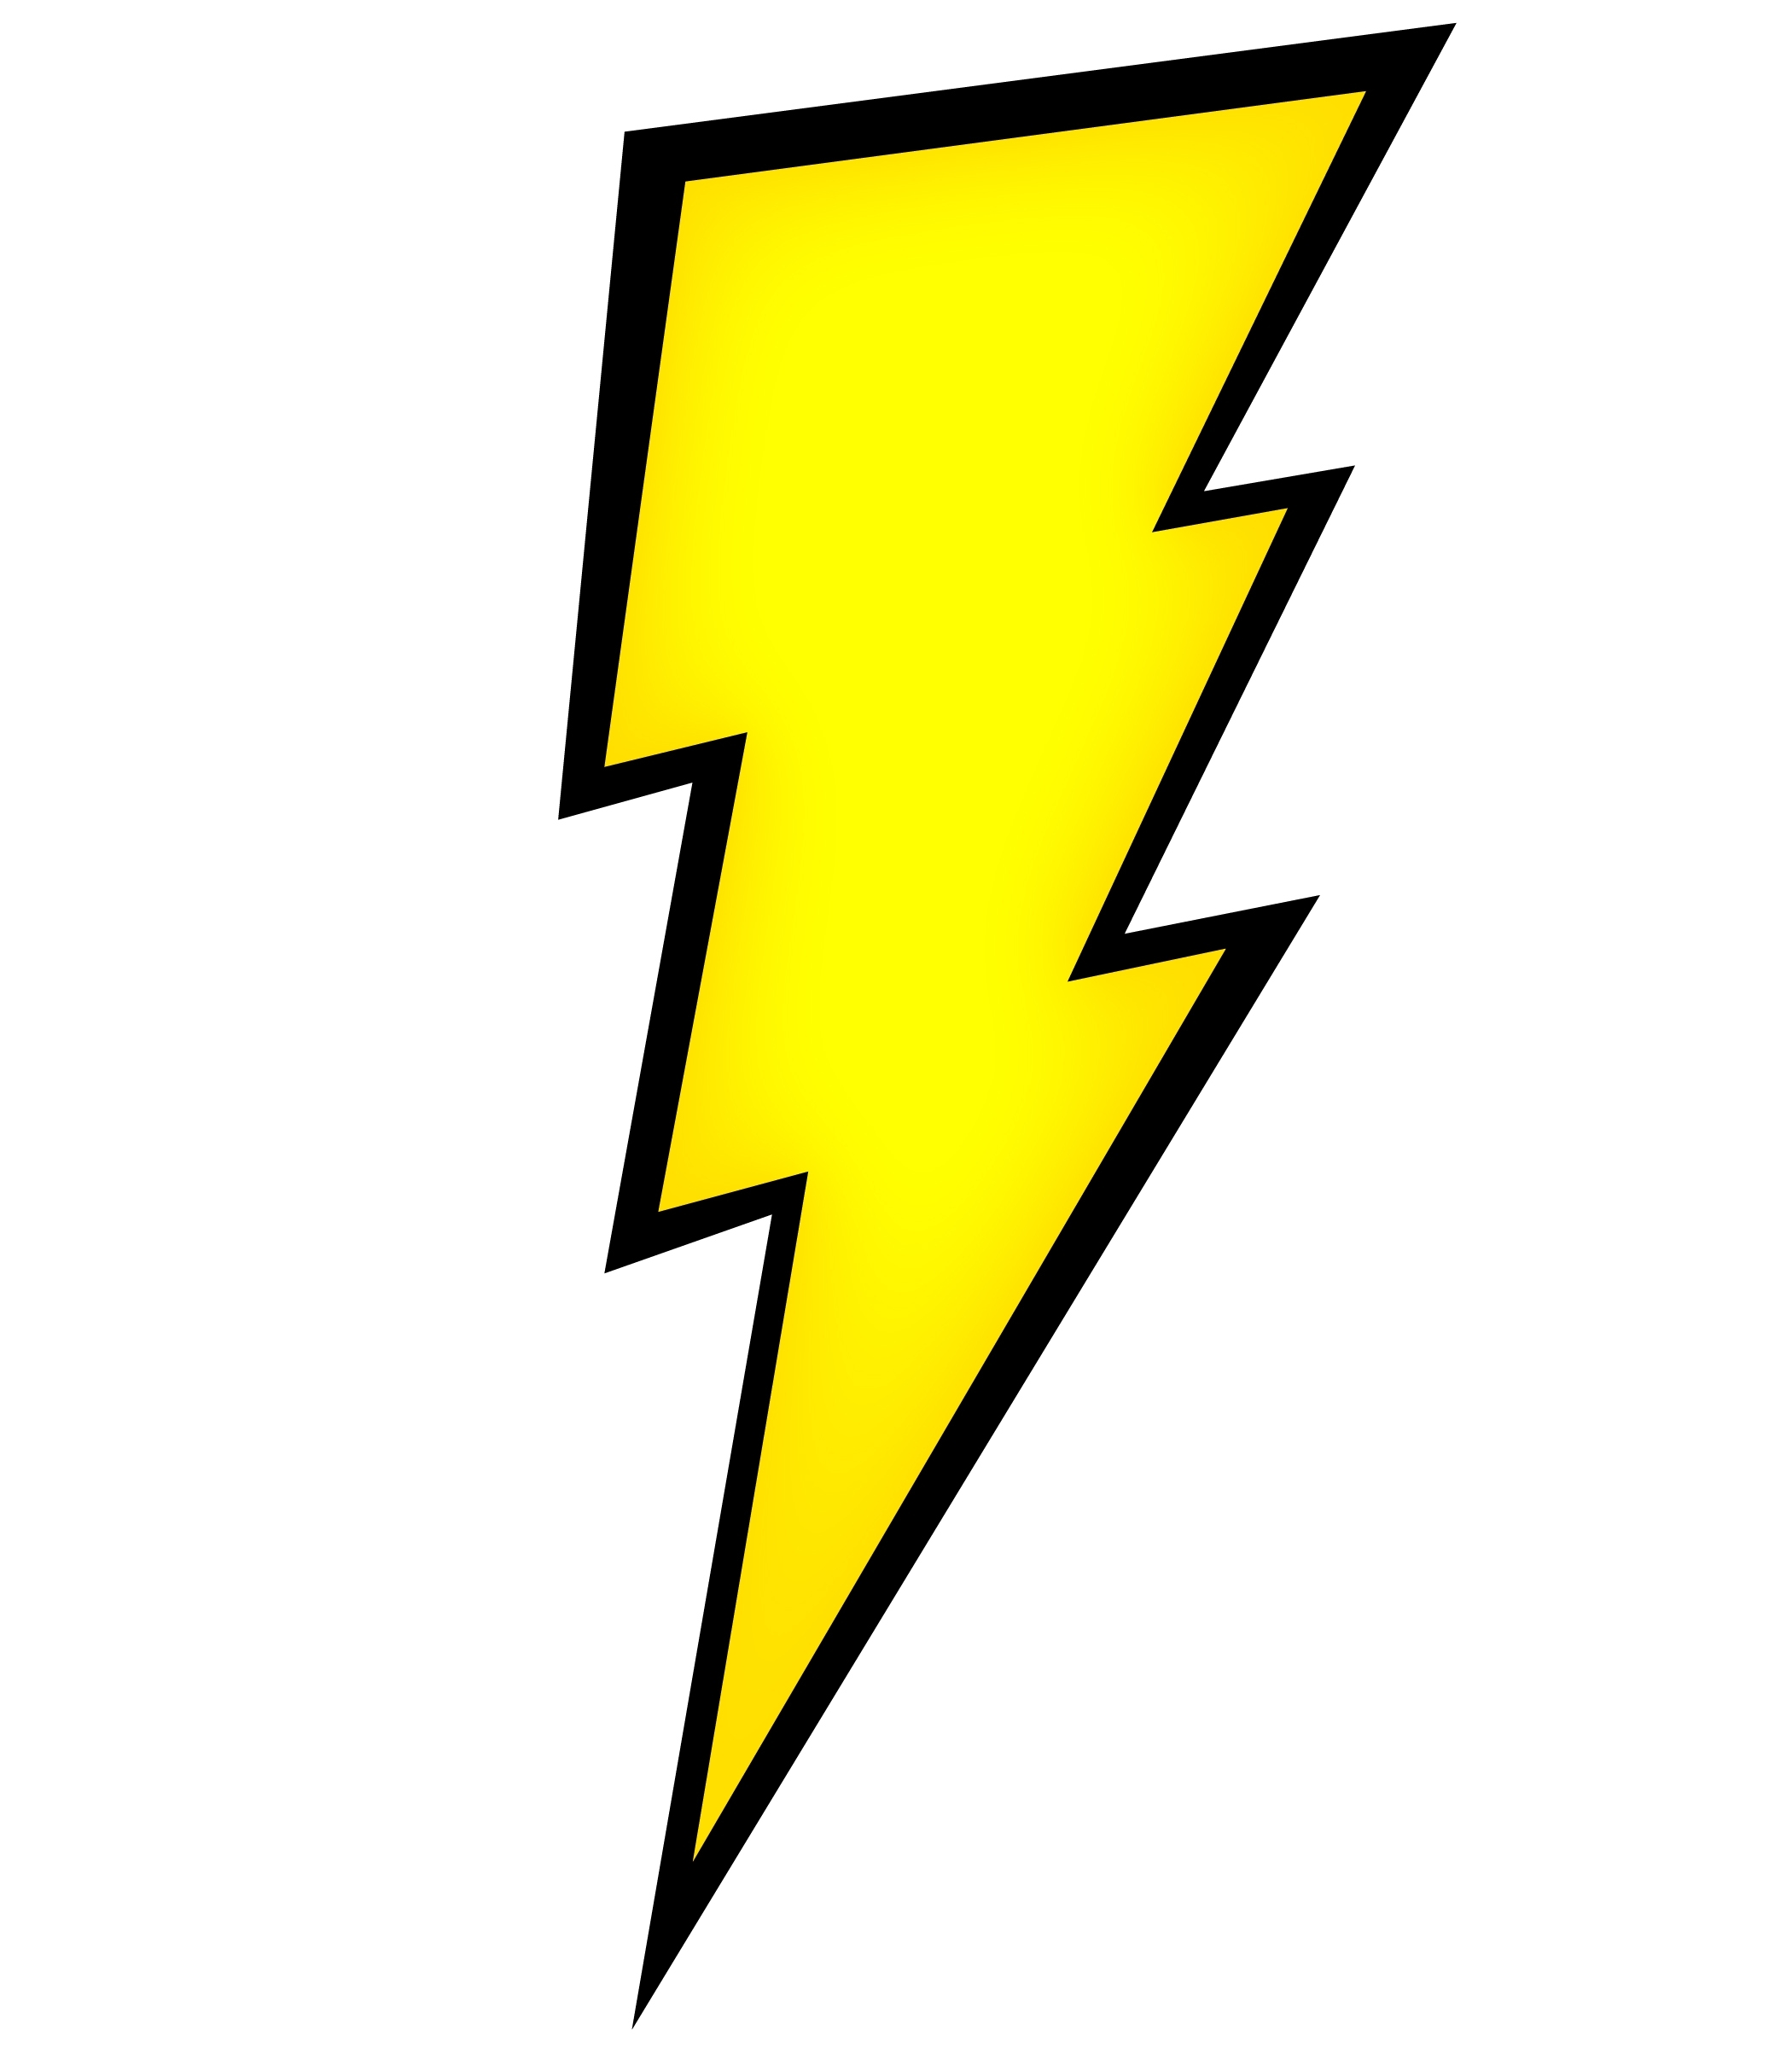 Bolt thunder electric logo Royalty Free Vector Image